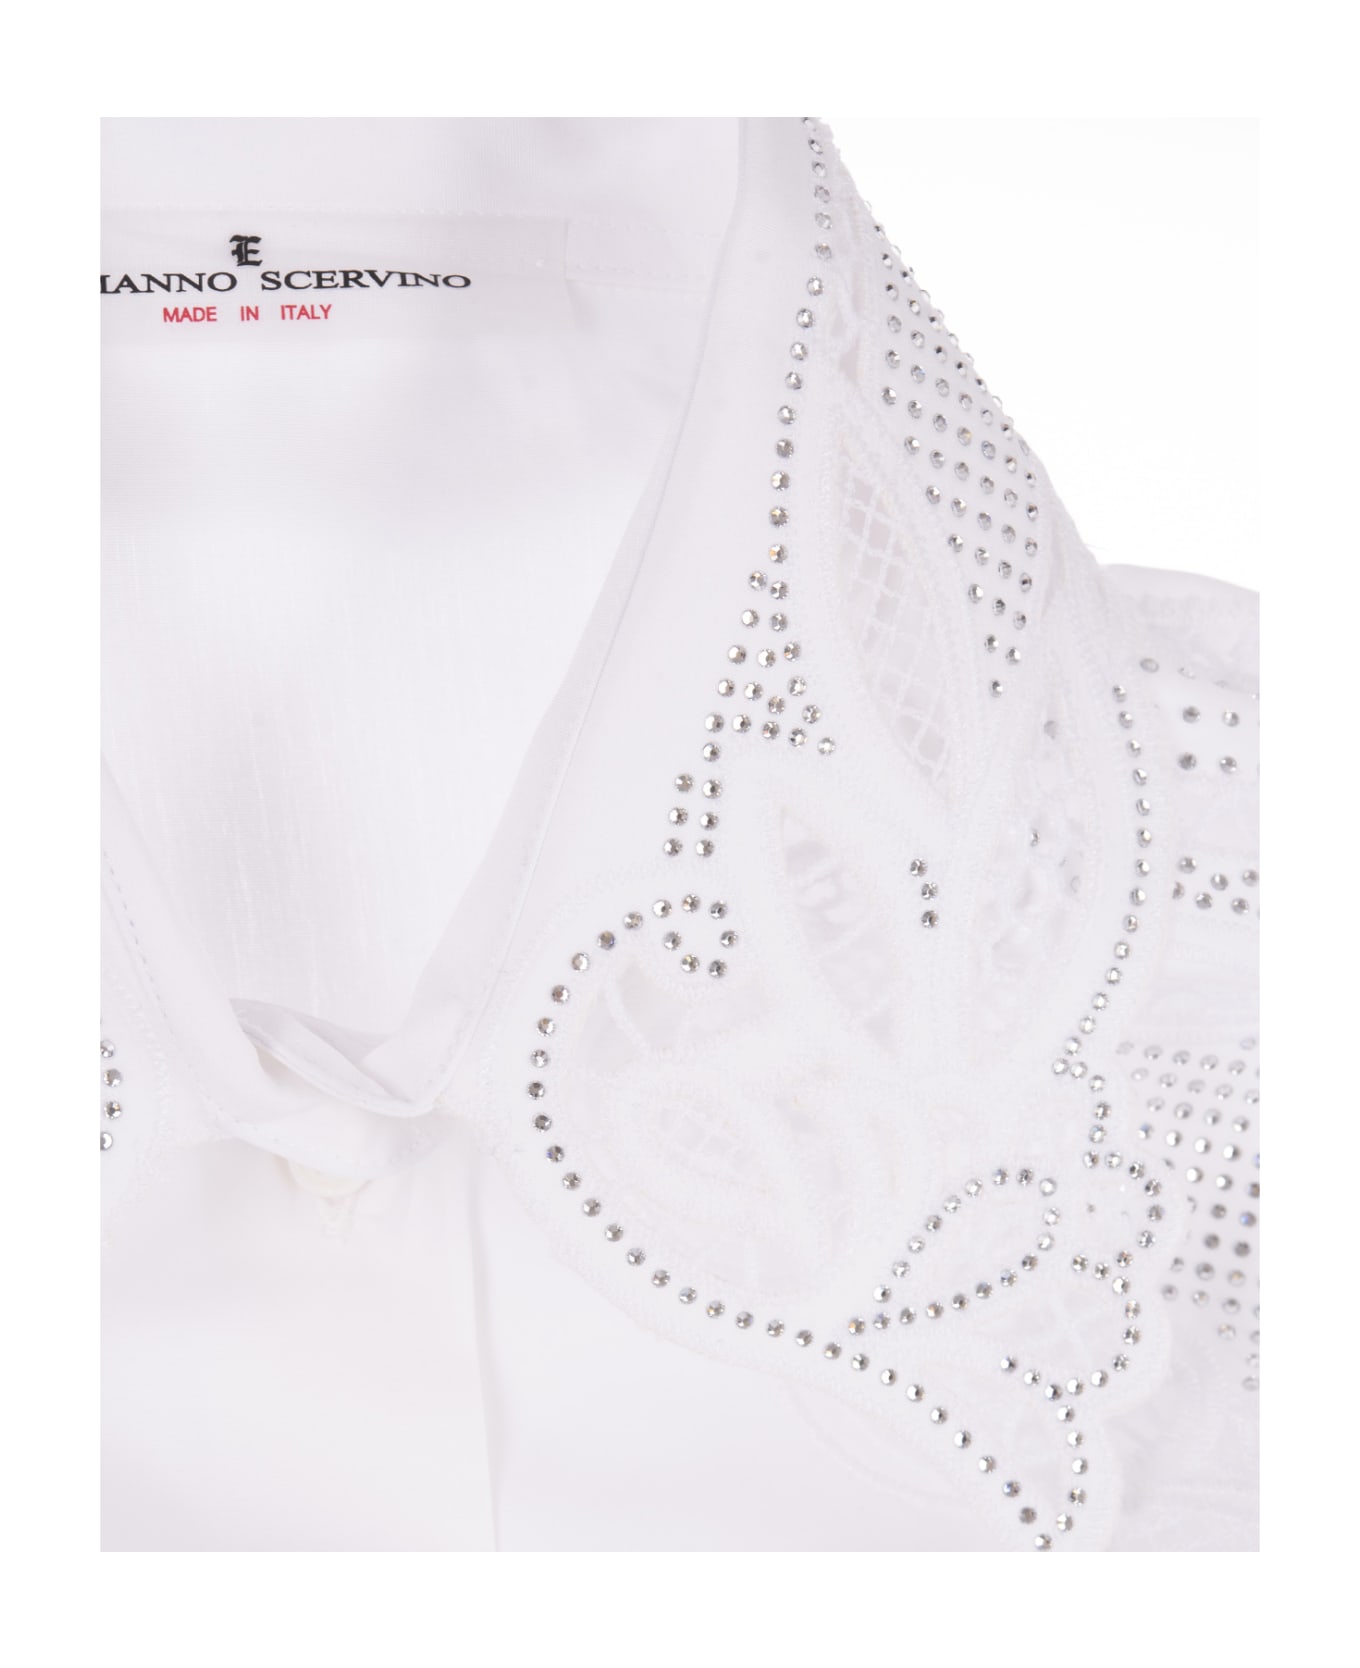 Ermanno Scervino White Over Shirt With Sangallo Lace Cut-outs - White シャツ